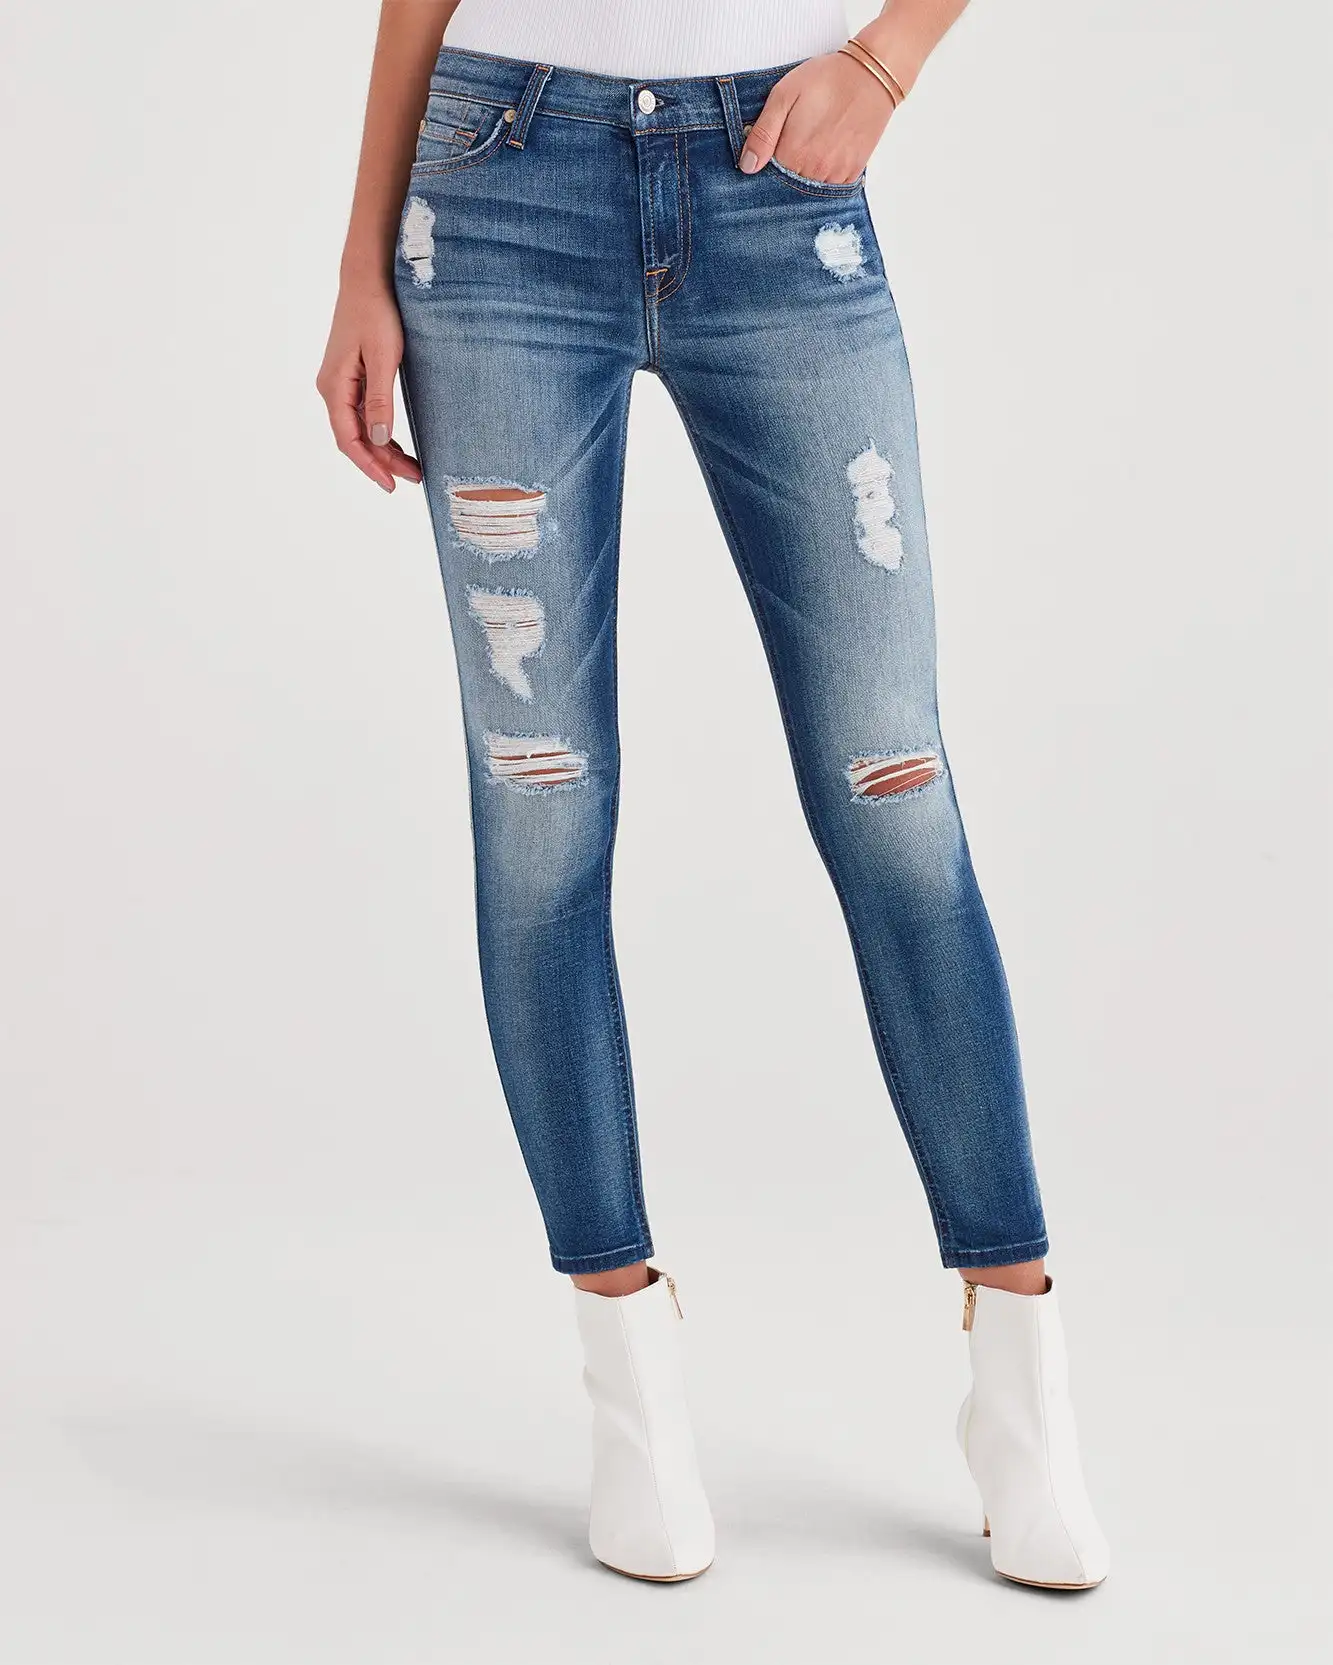 designer jeans girls